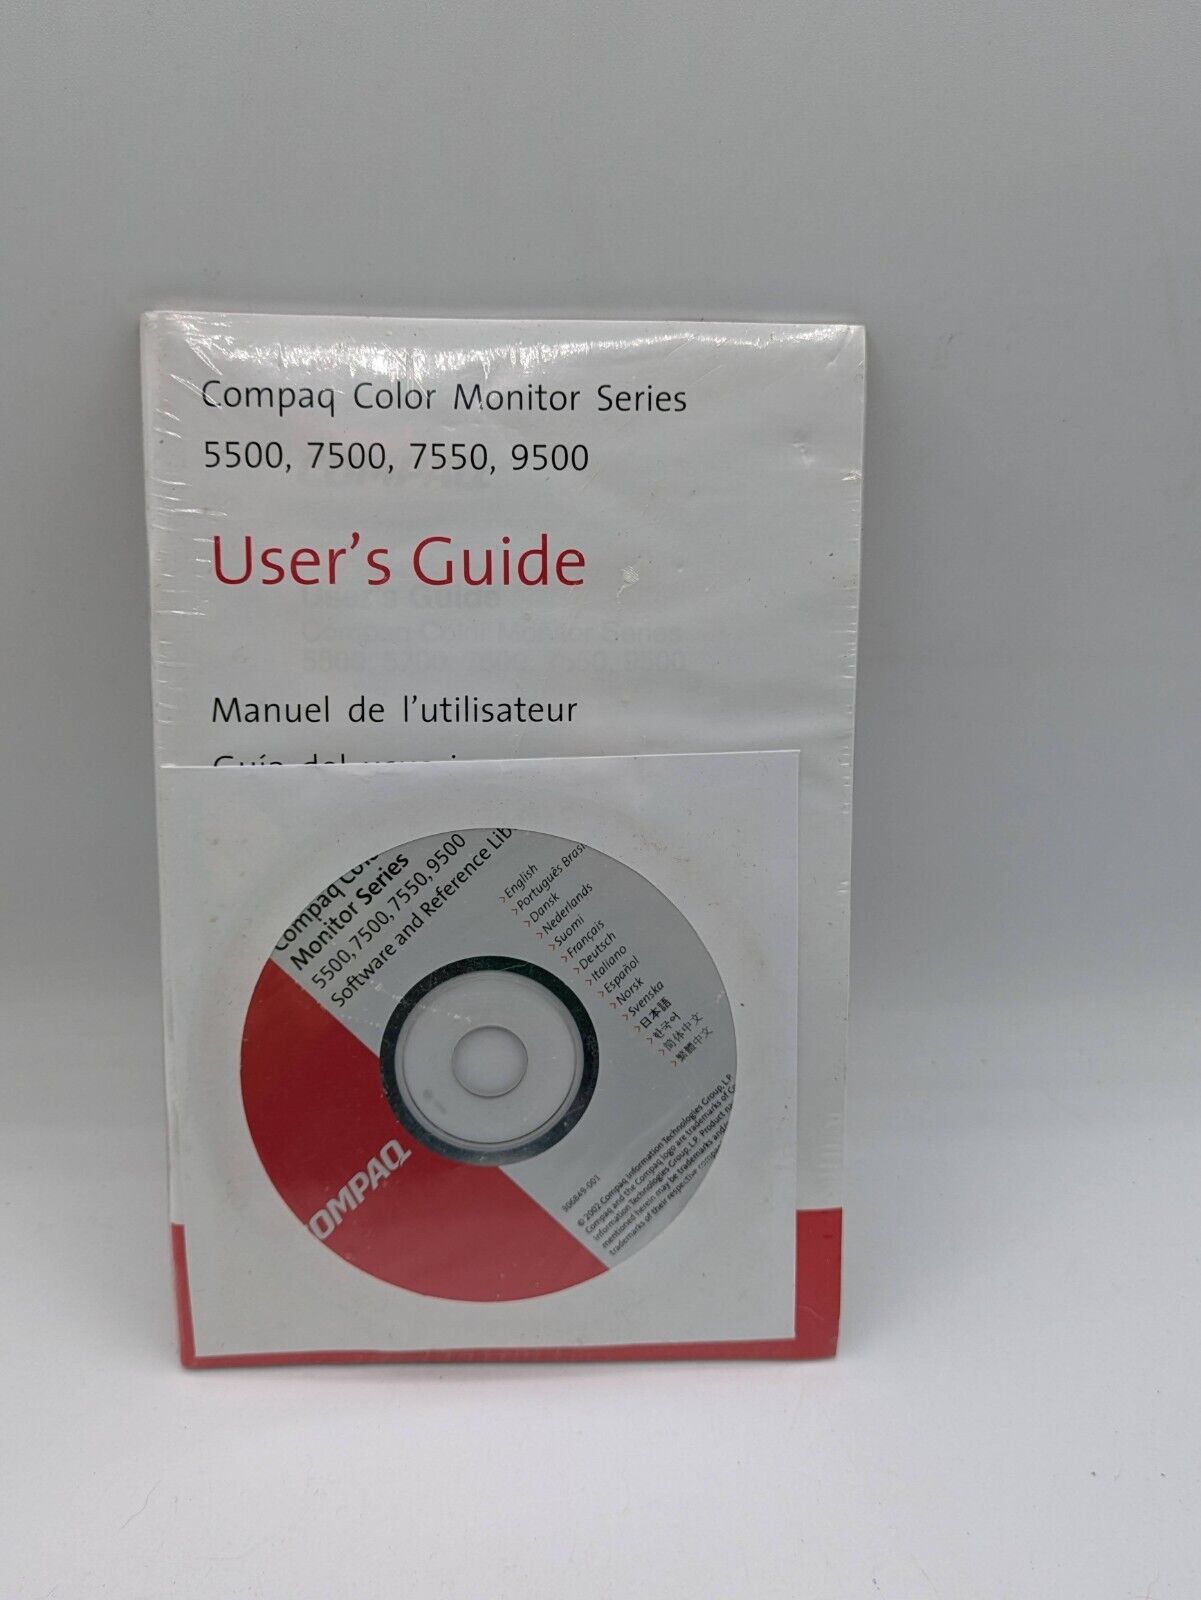 Compaq Color Monitor Series User\'s Guide (5500, 7500, 7550, 9500)